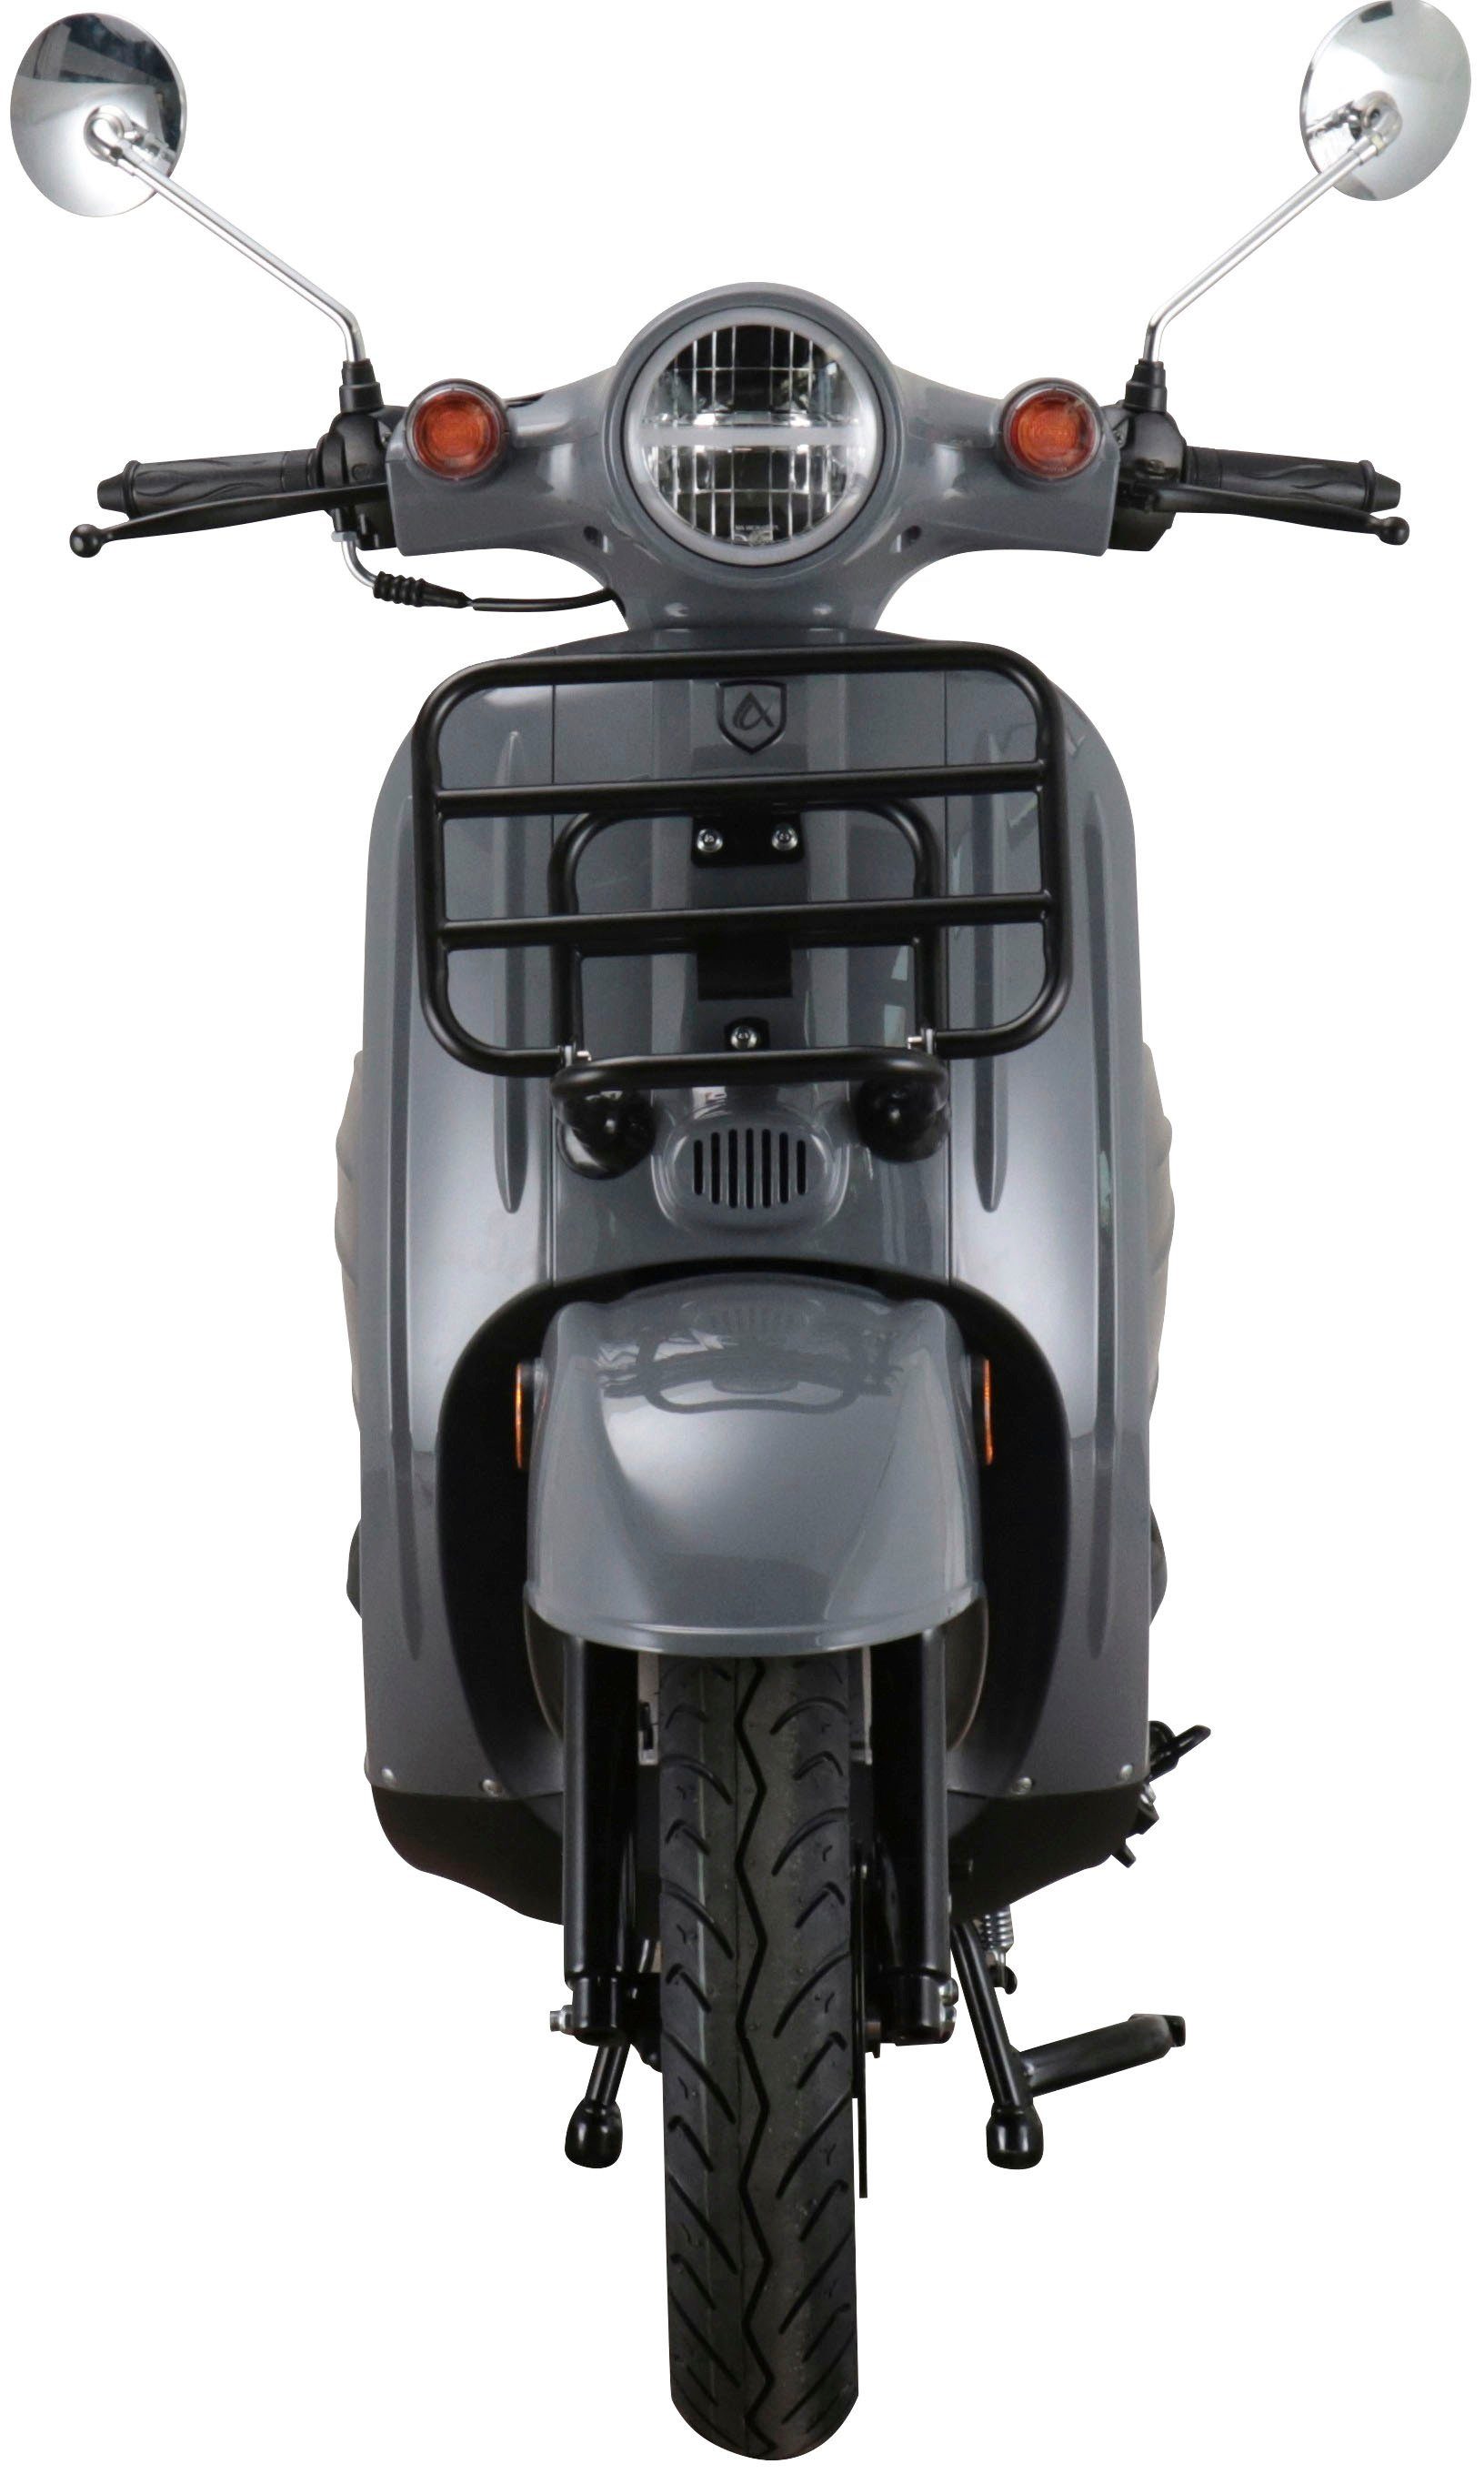 Motorroller mattgrau 50 Motors 5 45 Euro km/h, Adria, ccm, Alpha